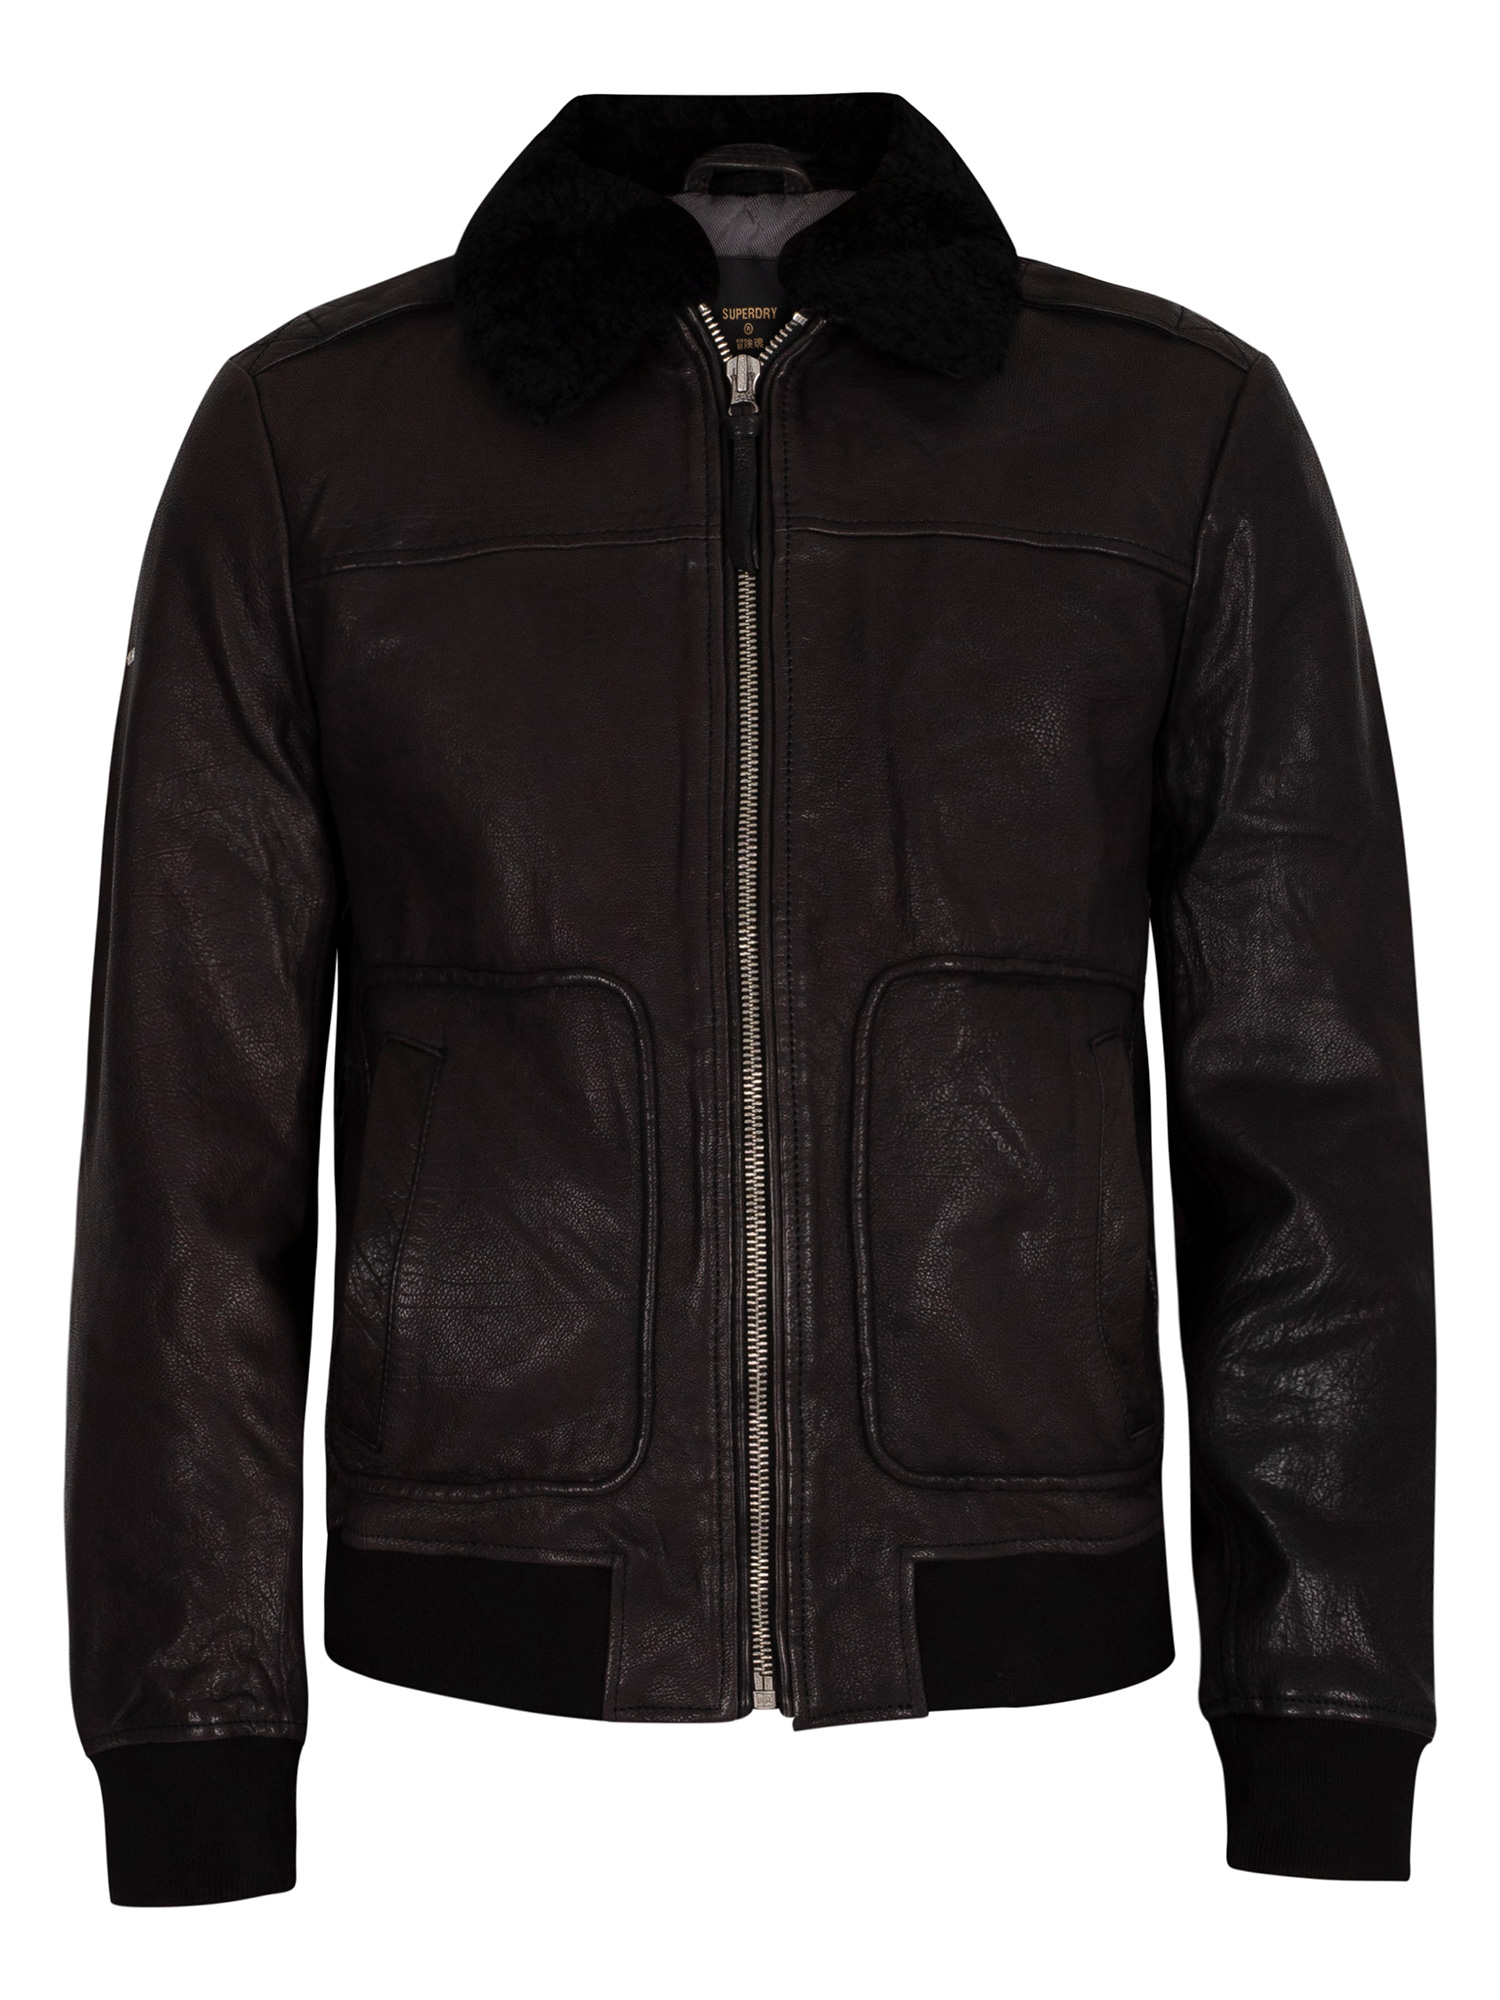 Superdry Aviator Flight Leather Jacket - Black | Standout